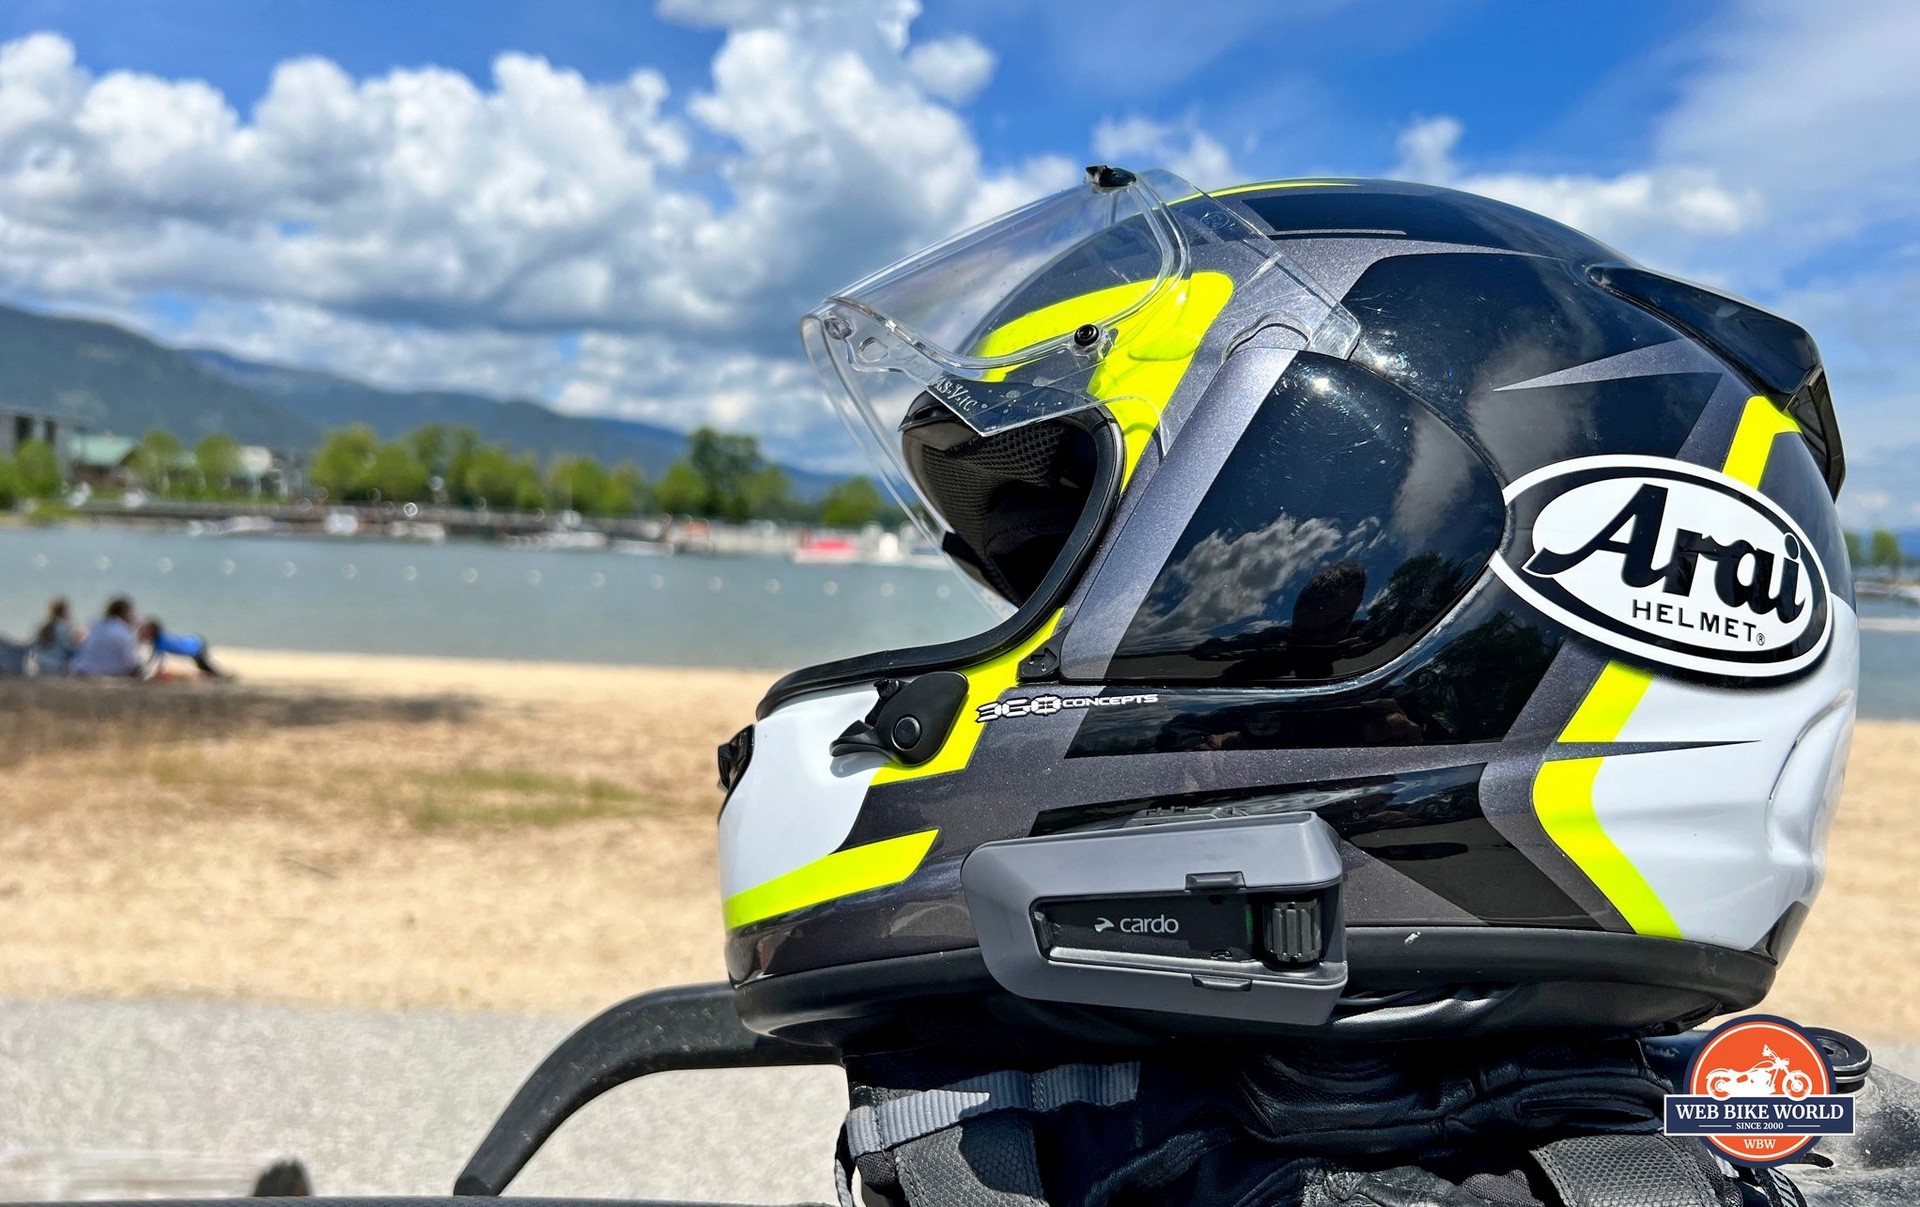 Cardo PACKTALK Edge Motorcycle Bluetooth  